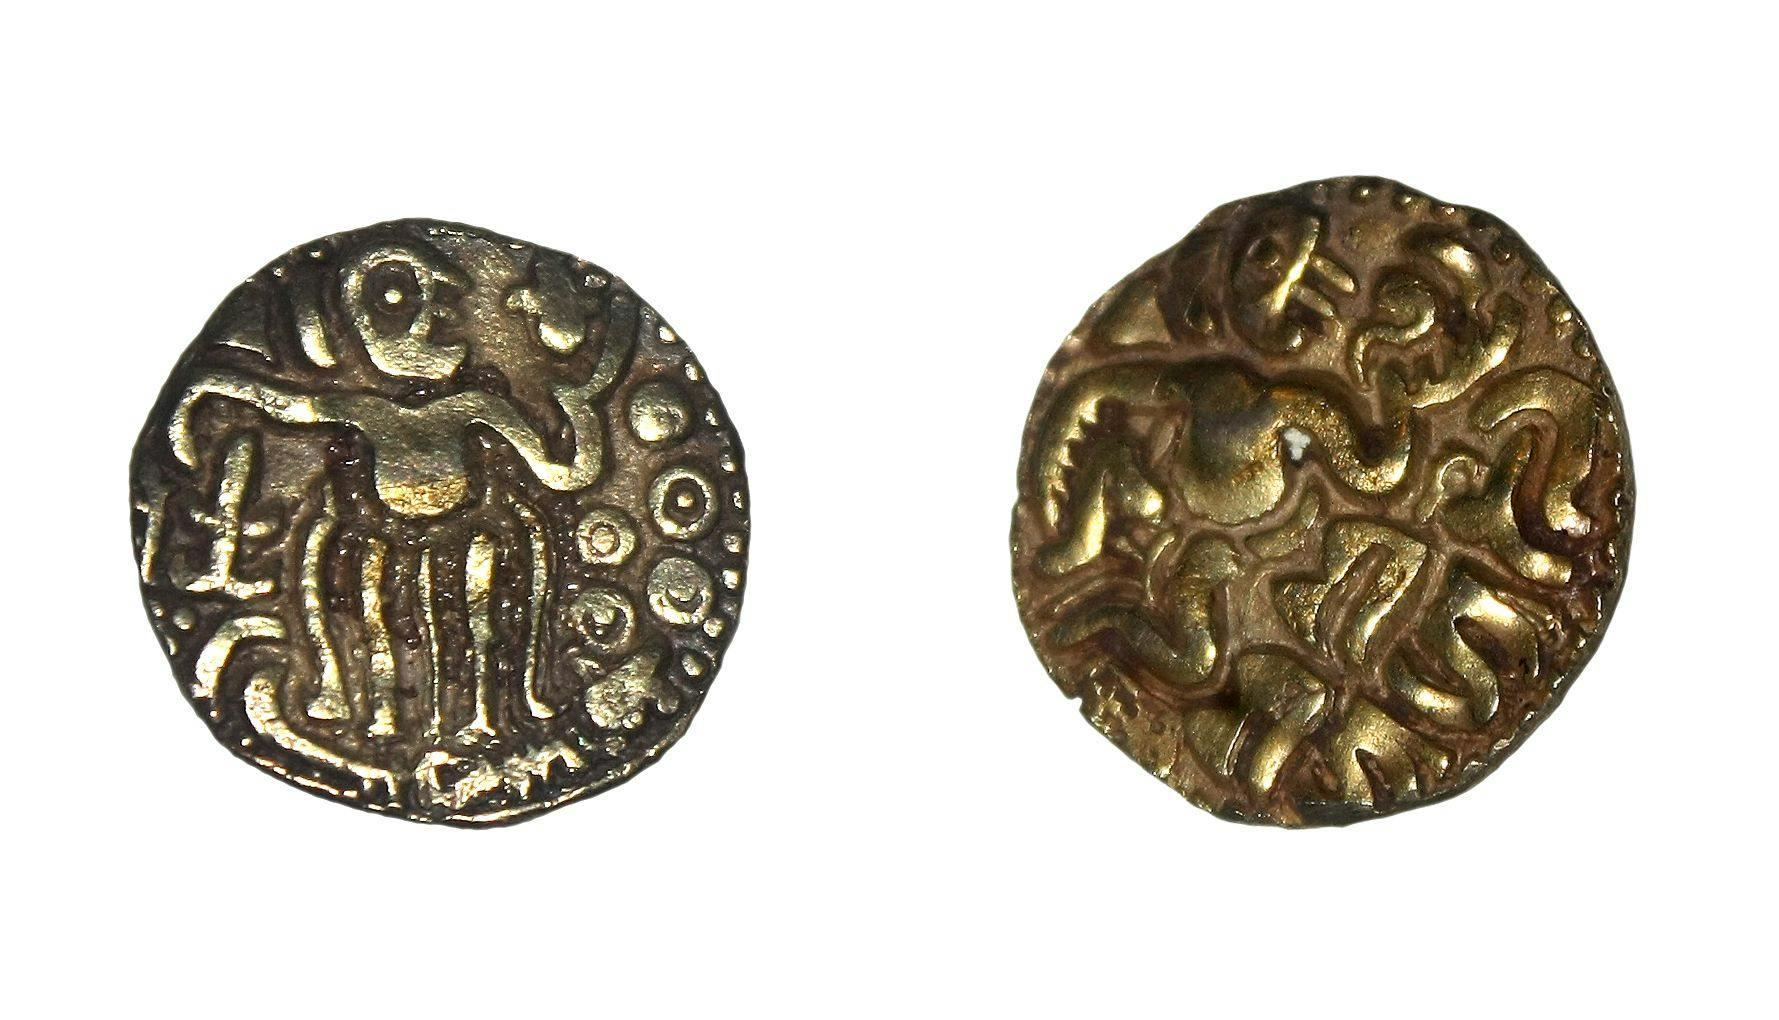 Gold coins of Rajaraja Chola